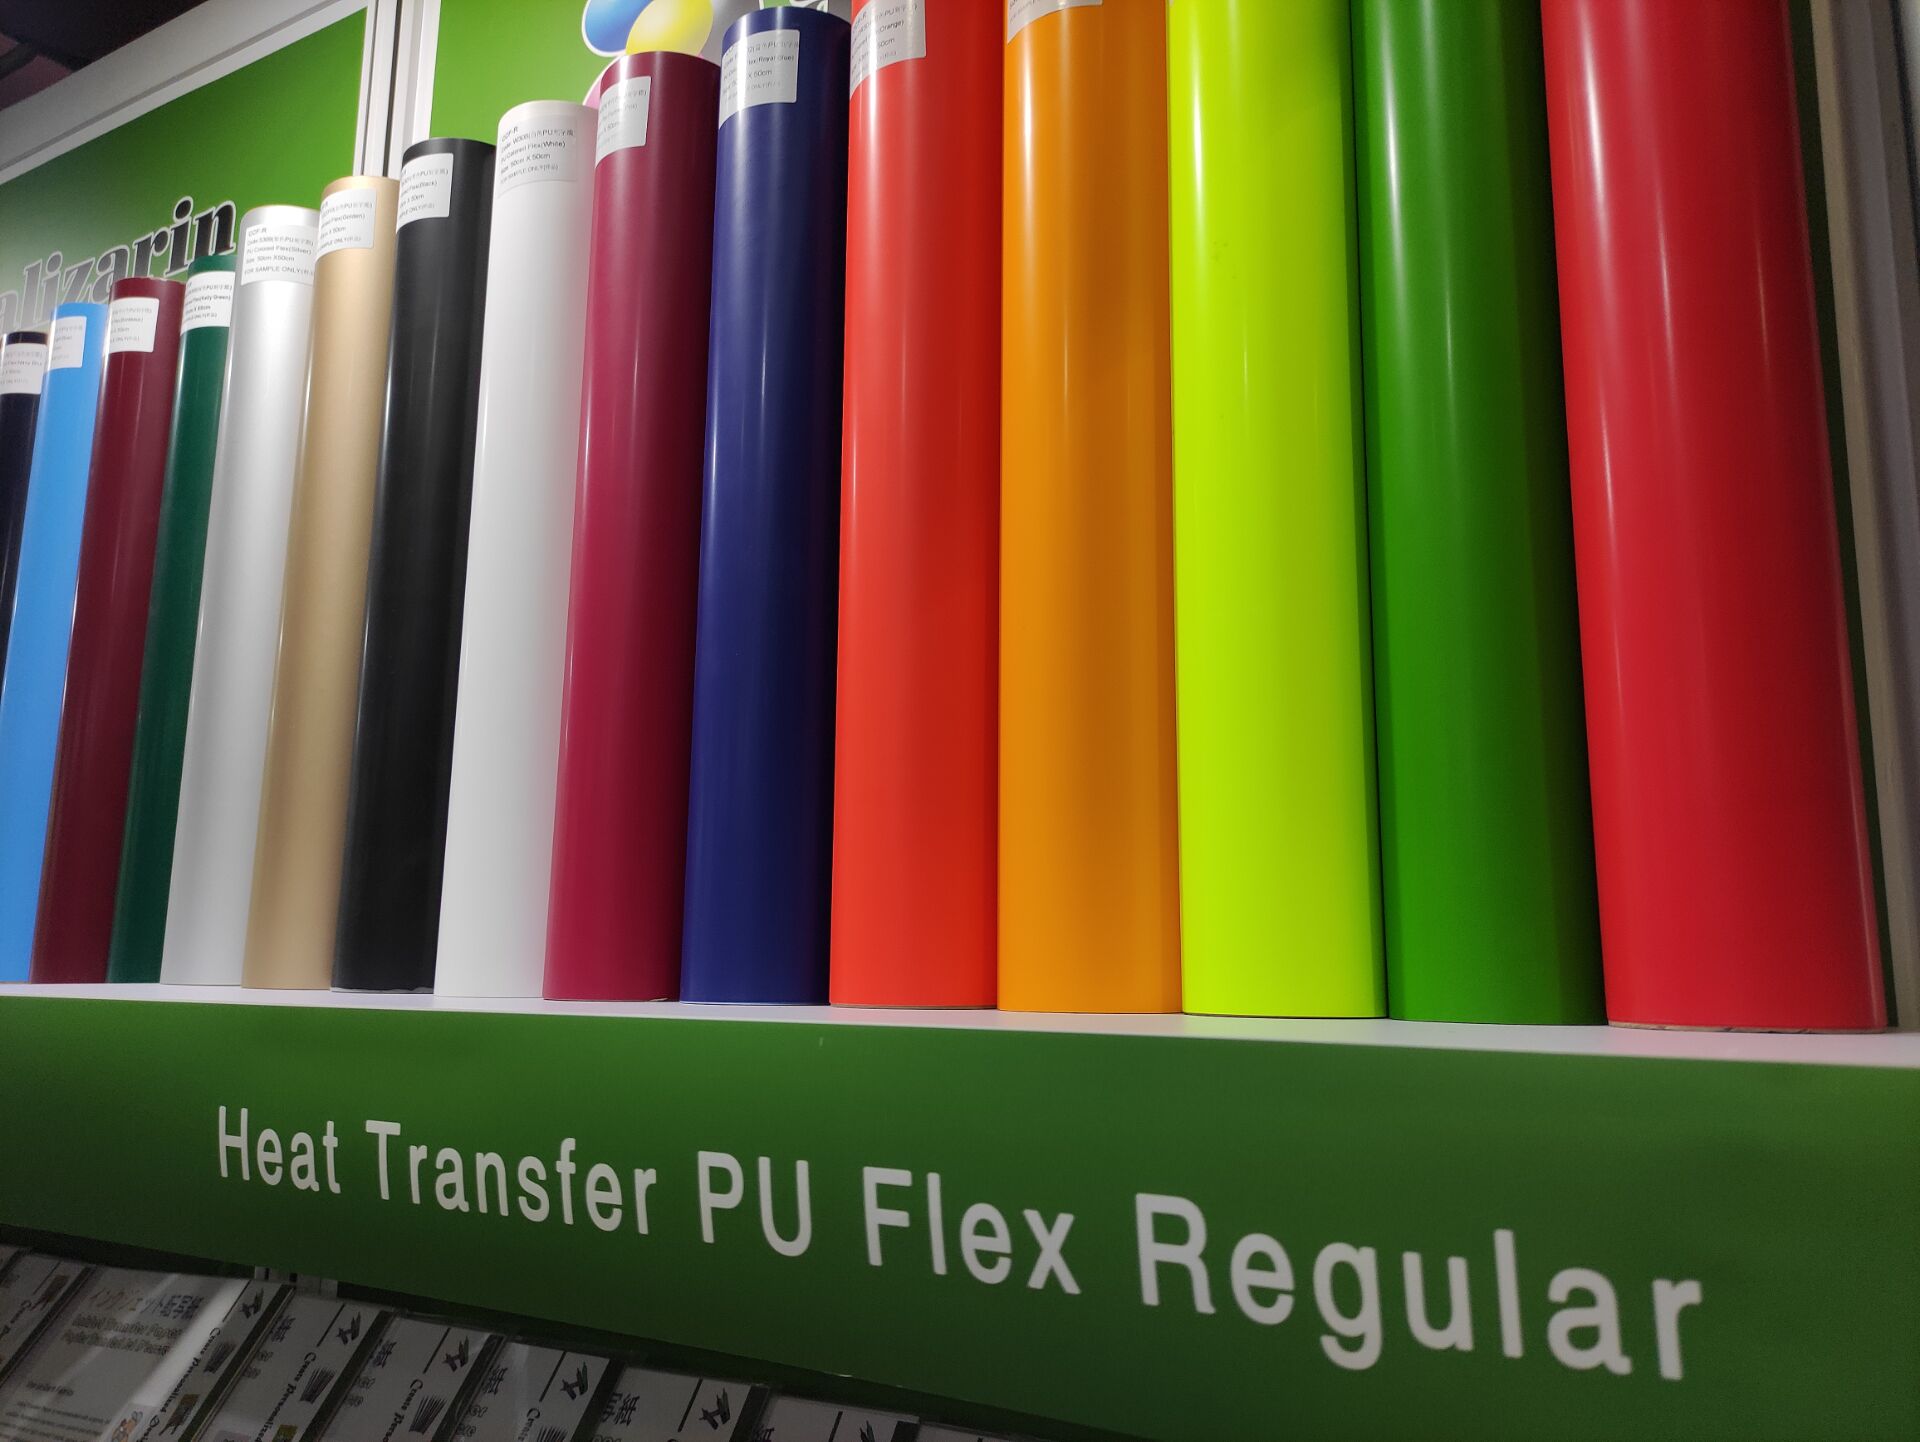 Heat Transfer Pu Flex Regular